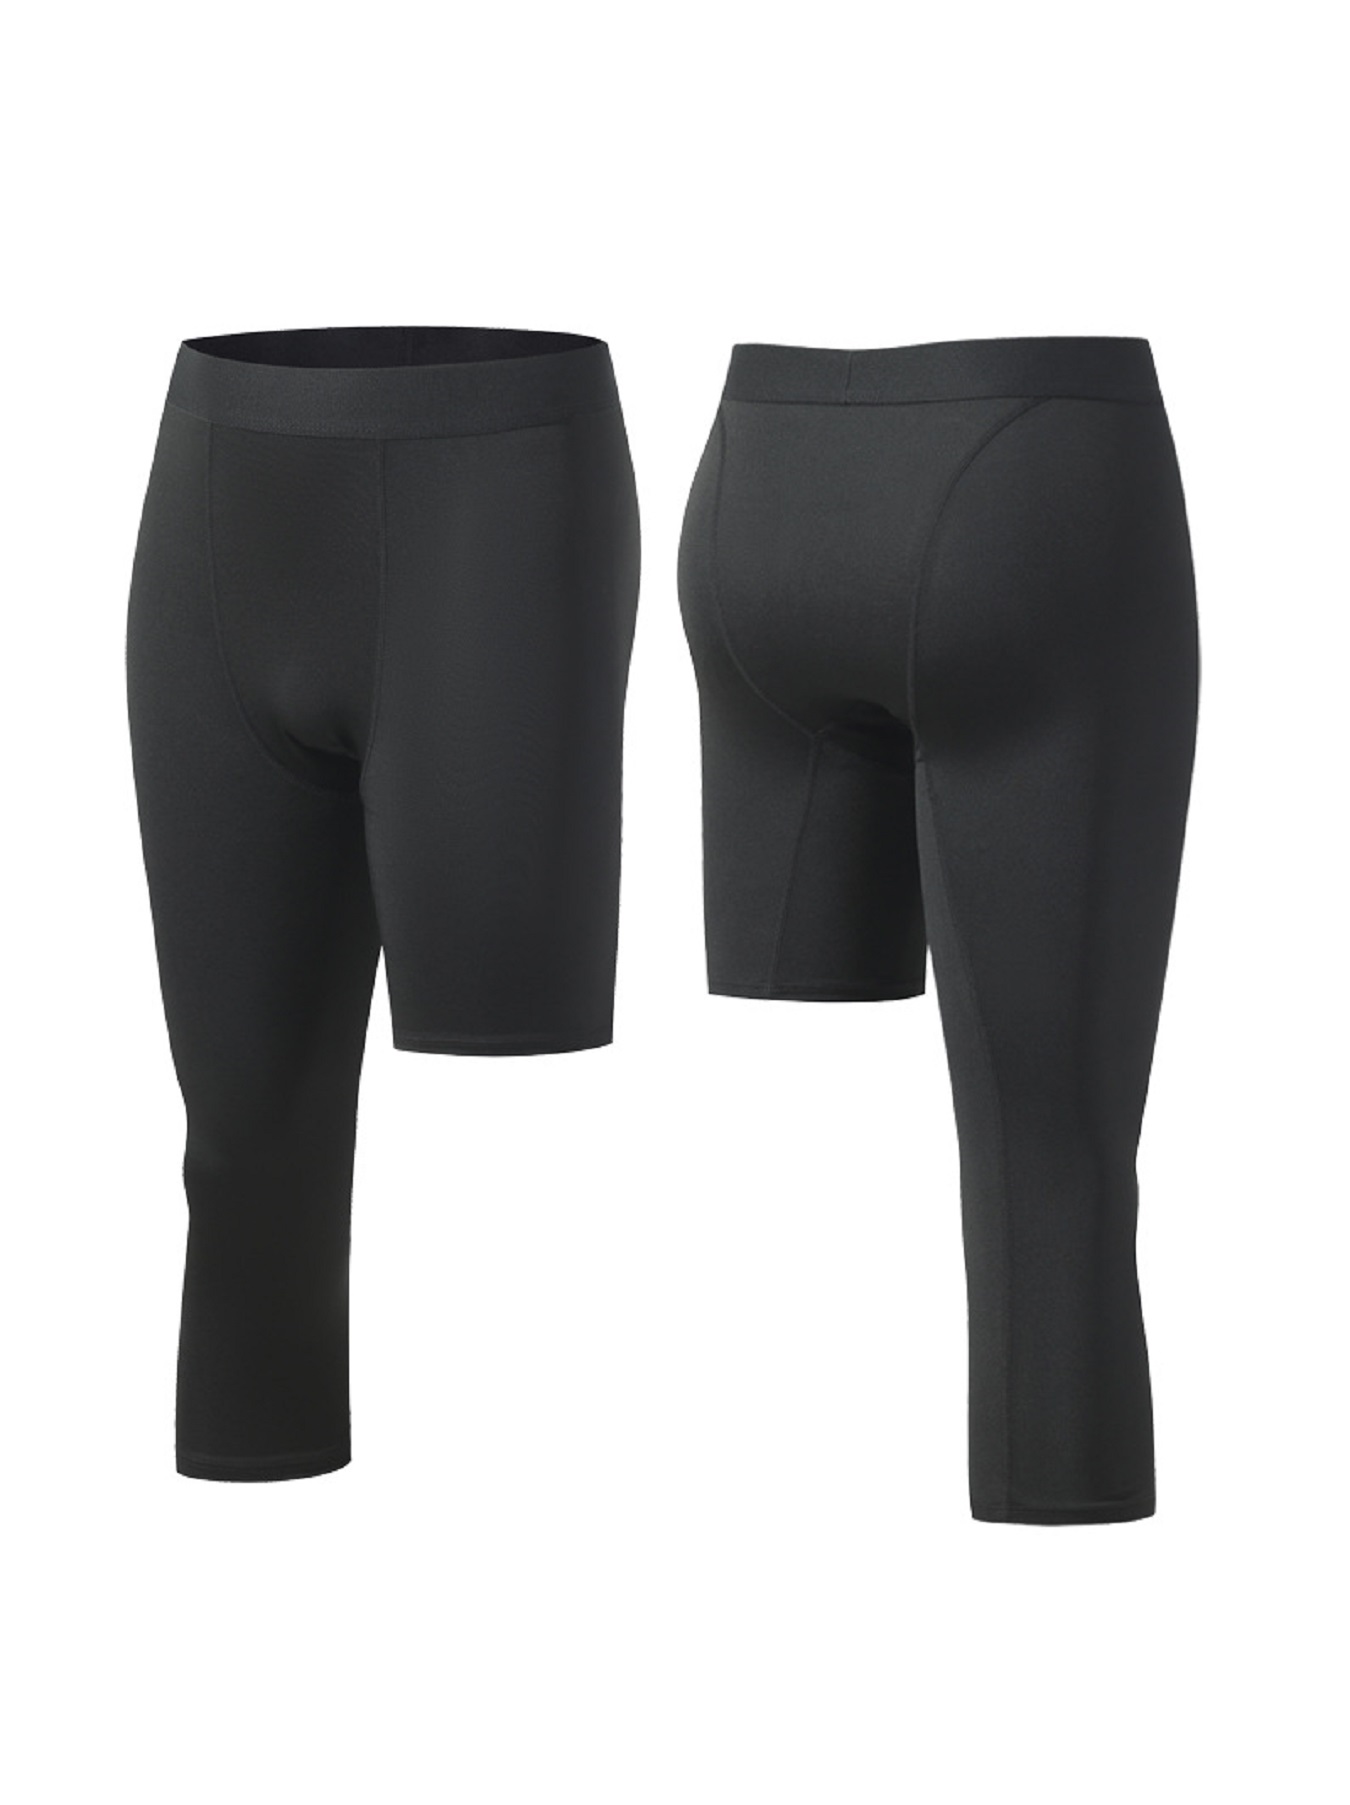 Men One Leg Compression Pants 3/4 Capri Tights Athletic Basketball Leggings  Workout Base Layer Underwear (Black 1, L) 